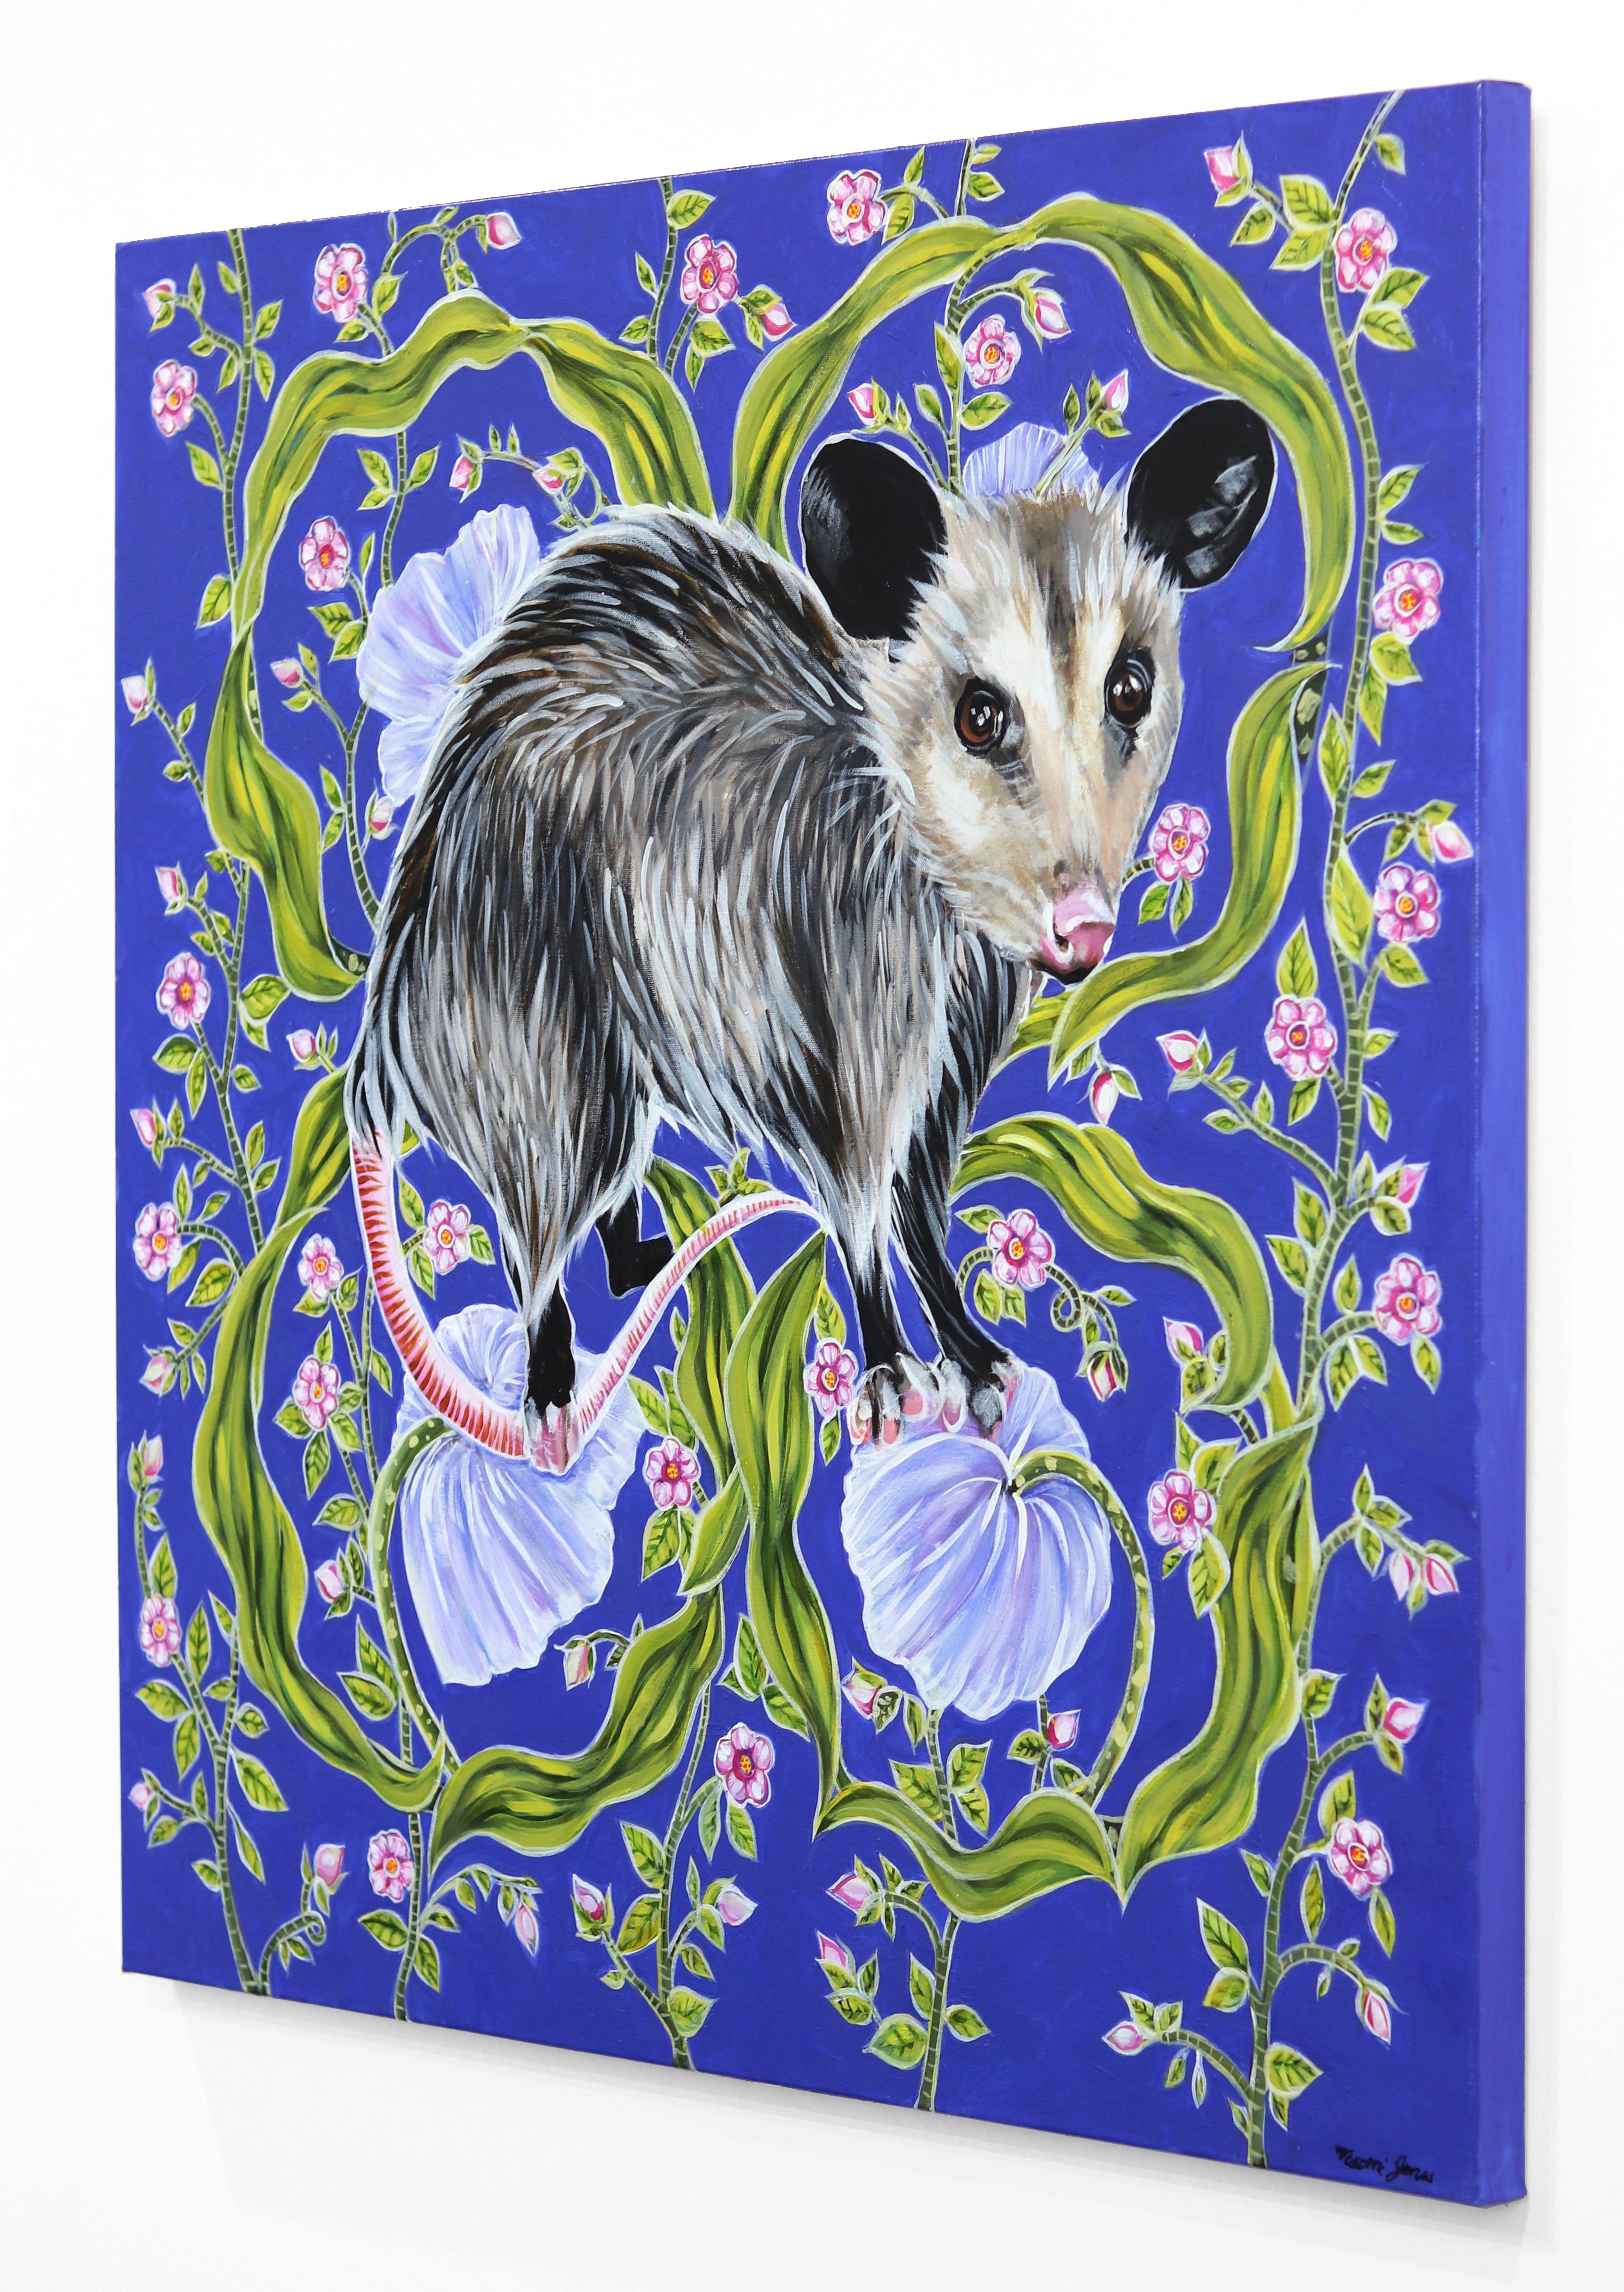 Possum on Blue - Original Vivid Figurative Animal Painting on Canvas For Sale 2